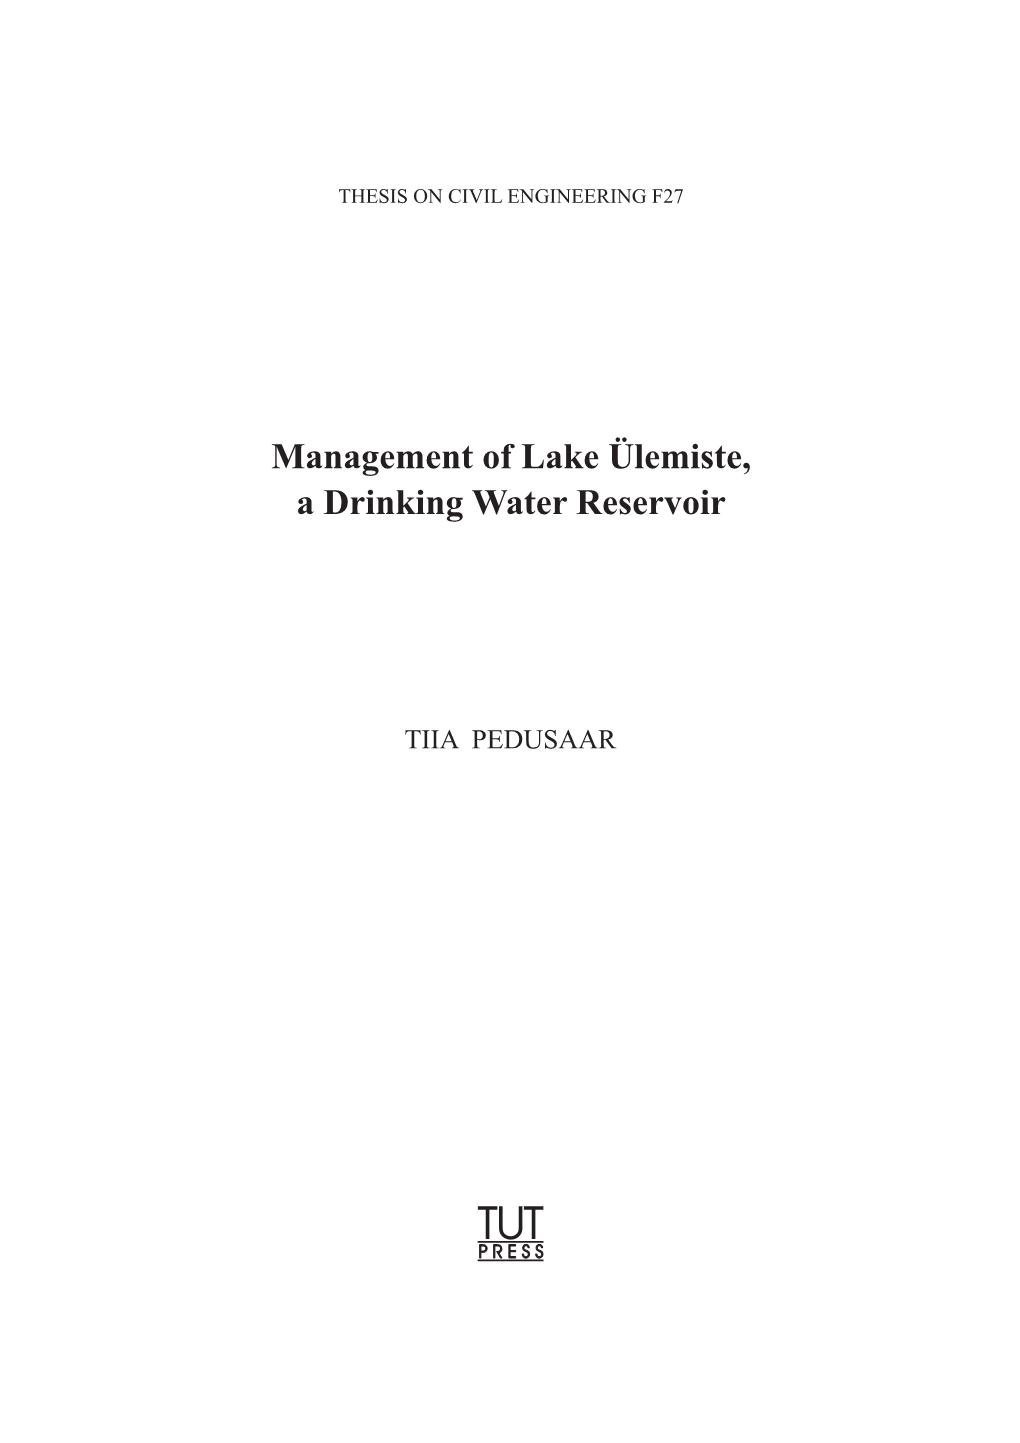 Management of Lake Ülemiste, a Drinking Water Reservoir